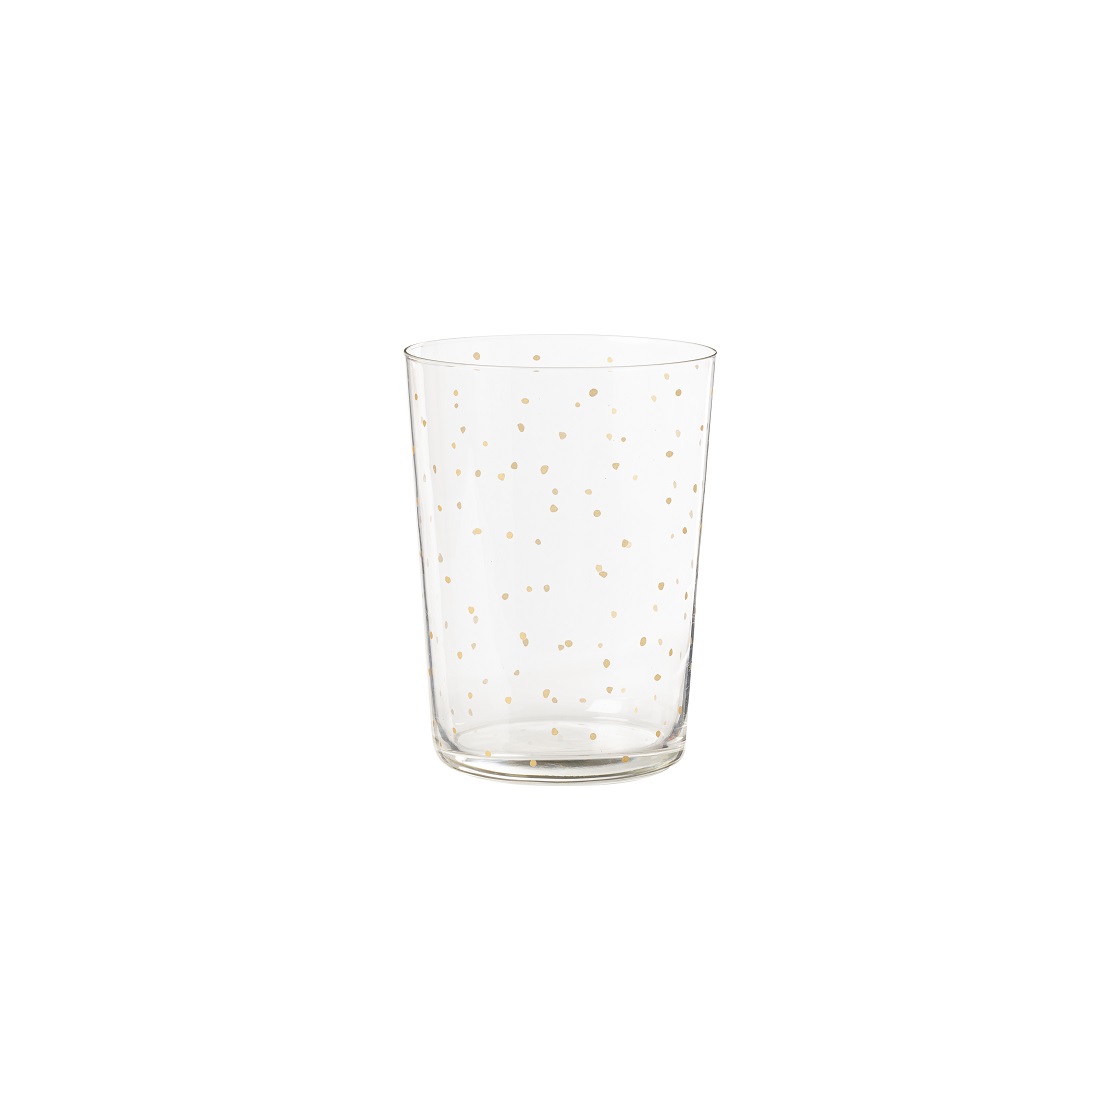 Festive Glassware Polka Dot Tumbler 0.5l Gift